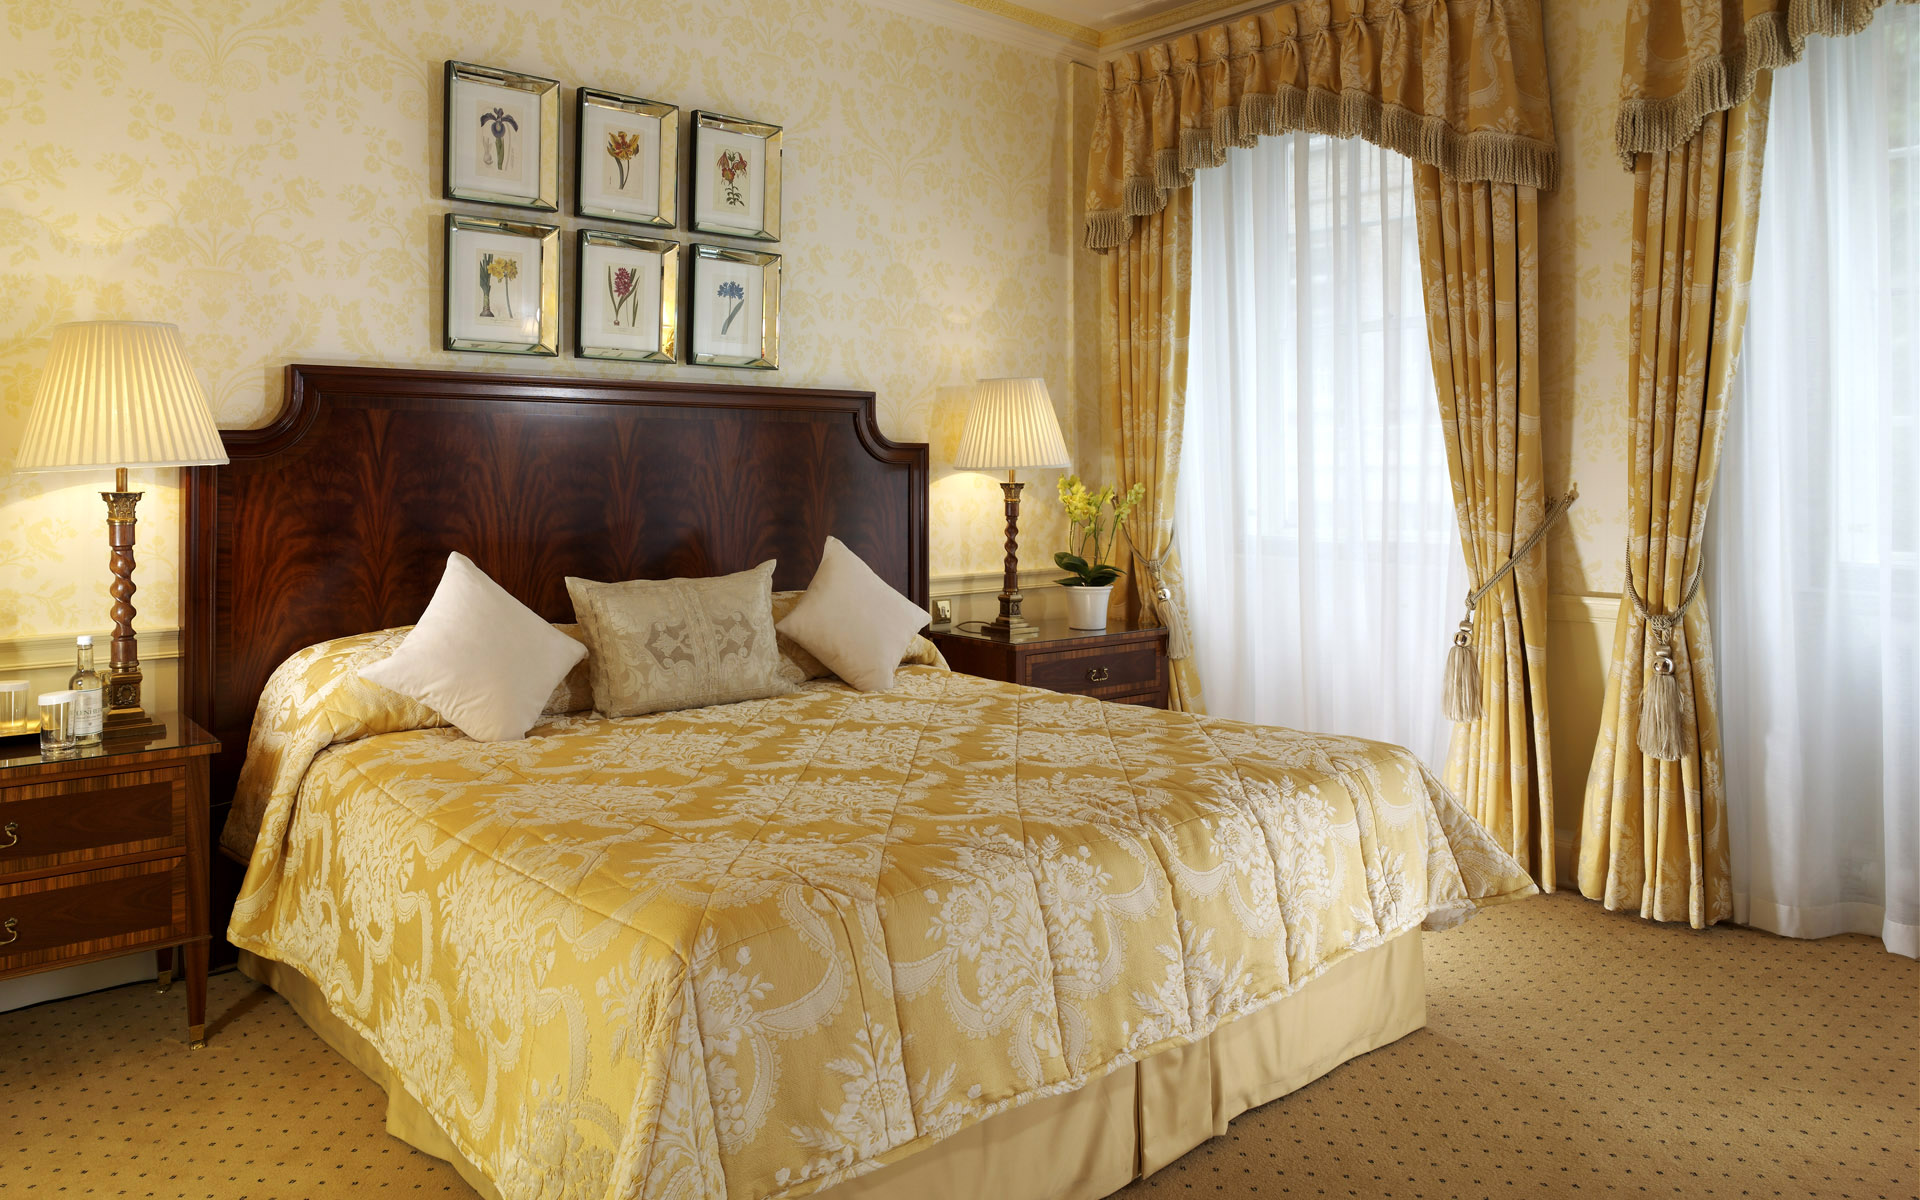 pretty bedroom wallpaper,bedroom,furniture,bed,room,bed sheet